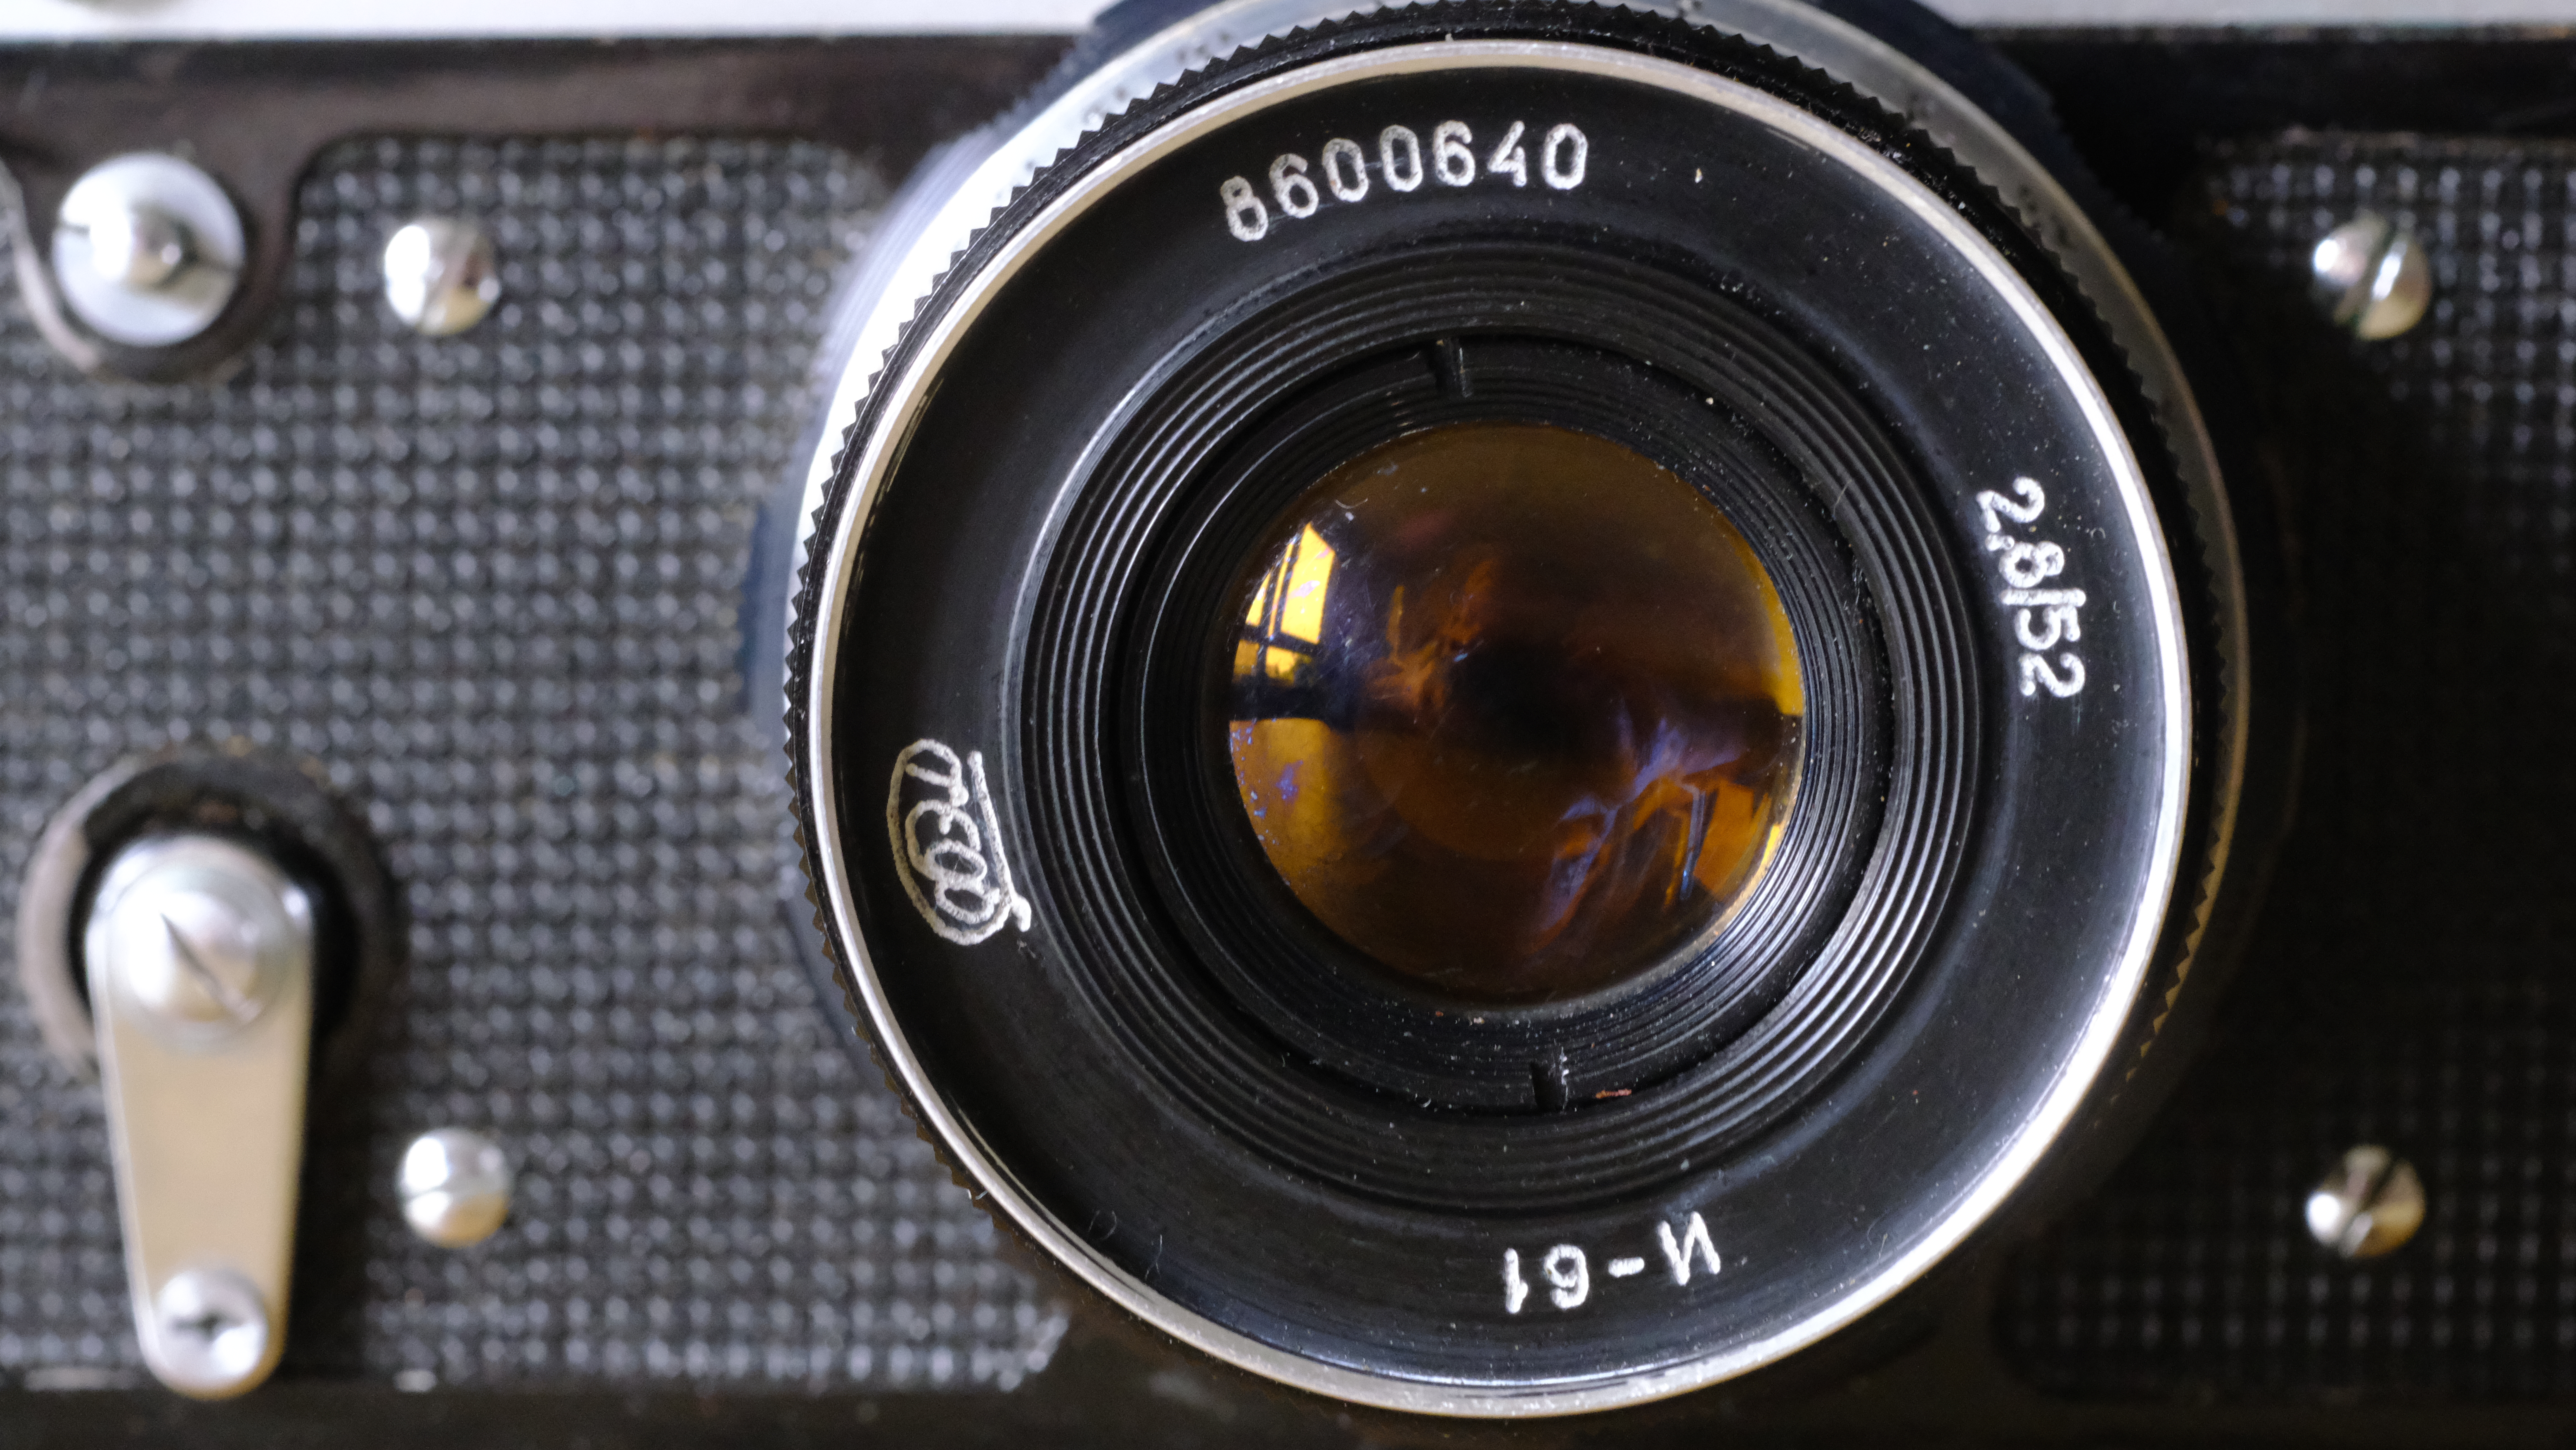 Industar-61 lens (Pic: Zenography)